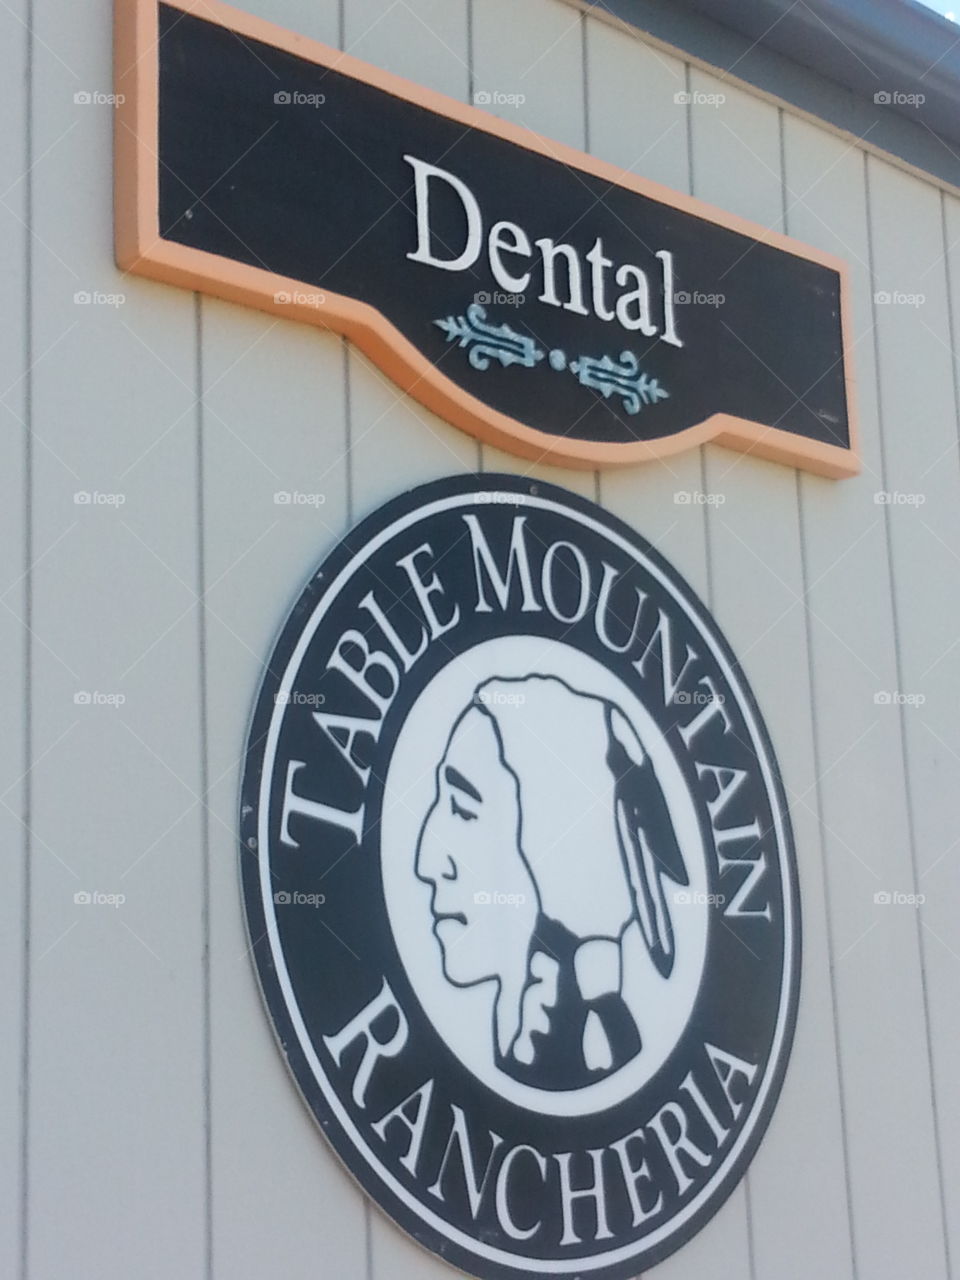 table mountain rancaria dental suite